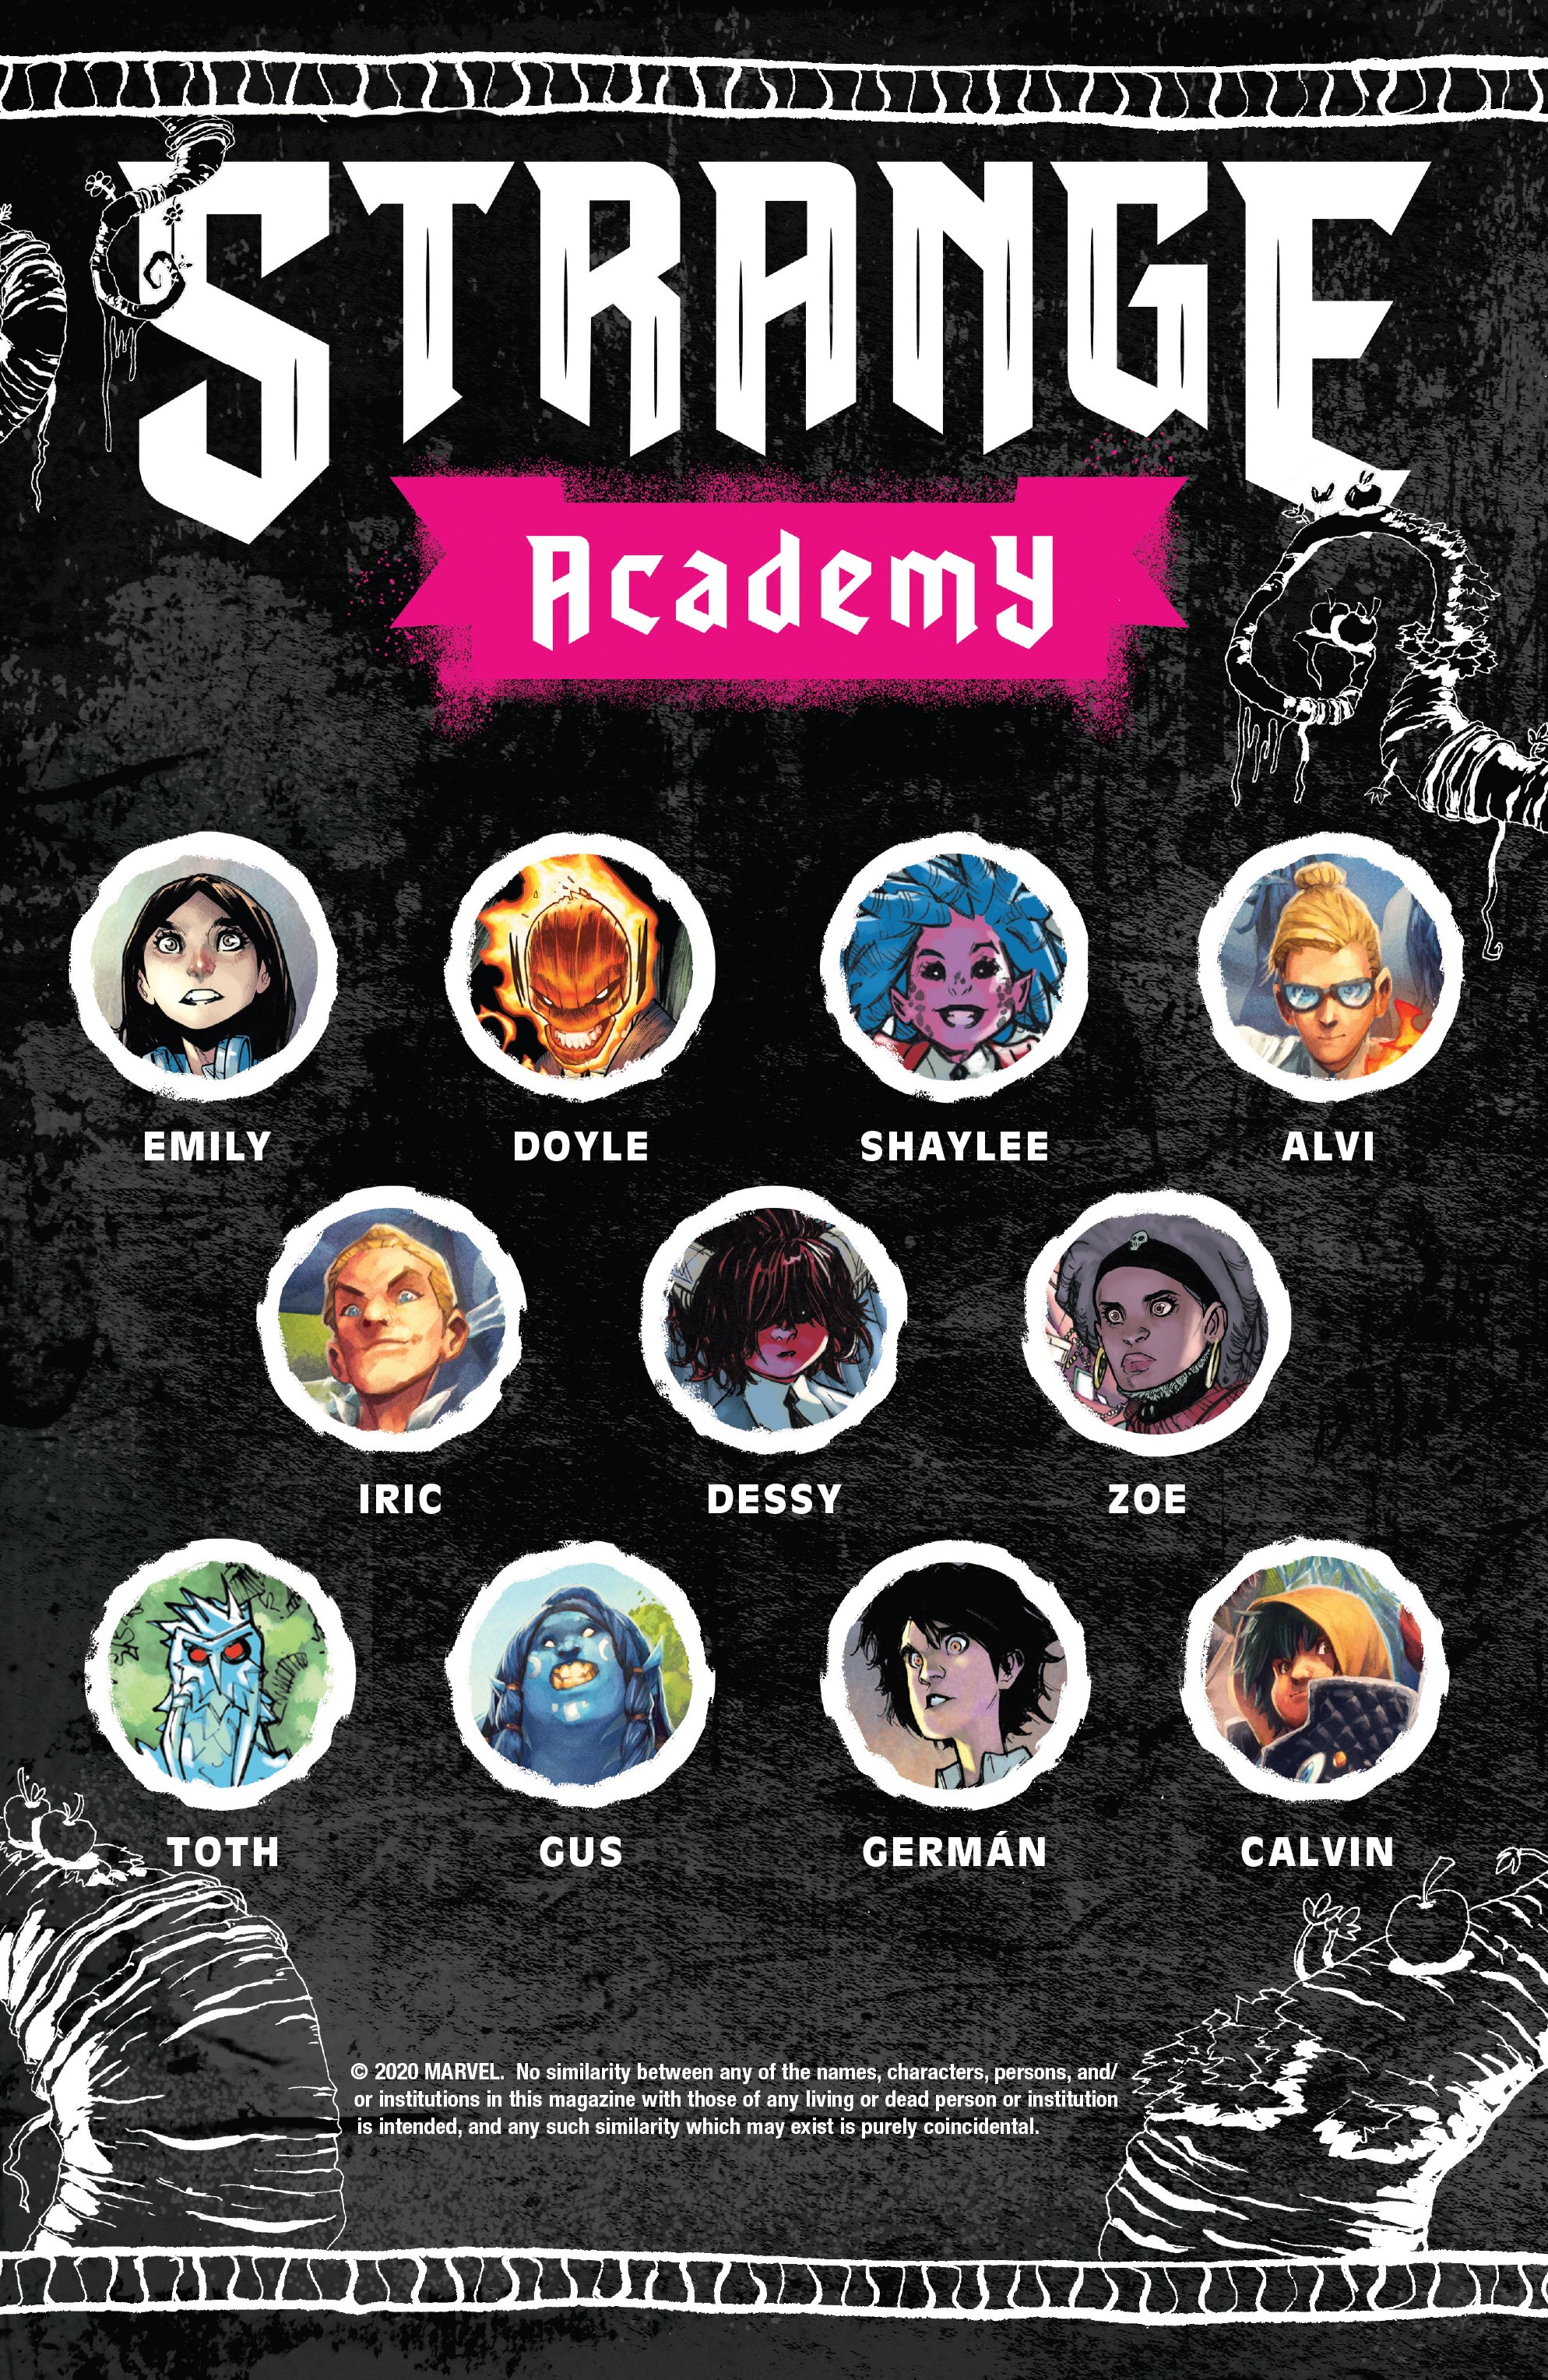 Read online Strange Academy comic -  Issue #5 - 3